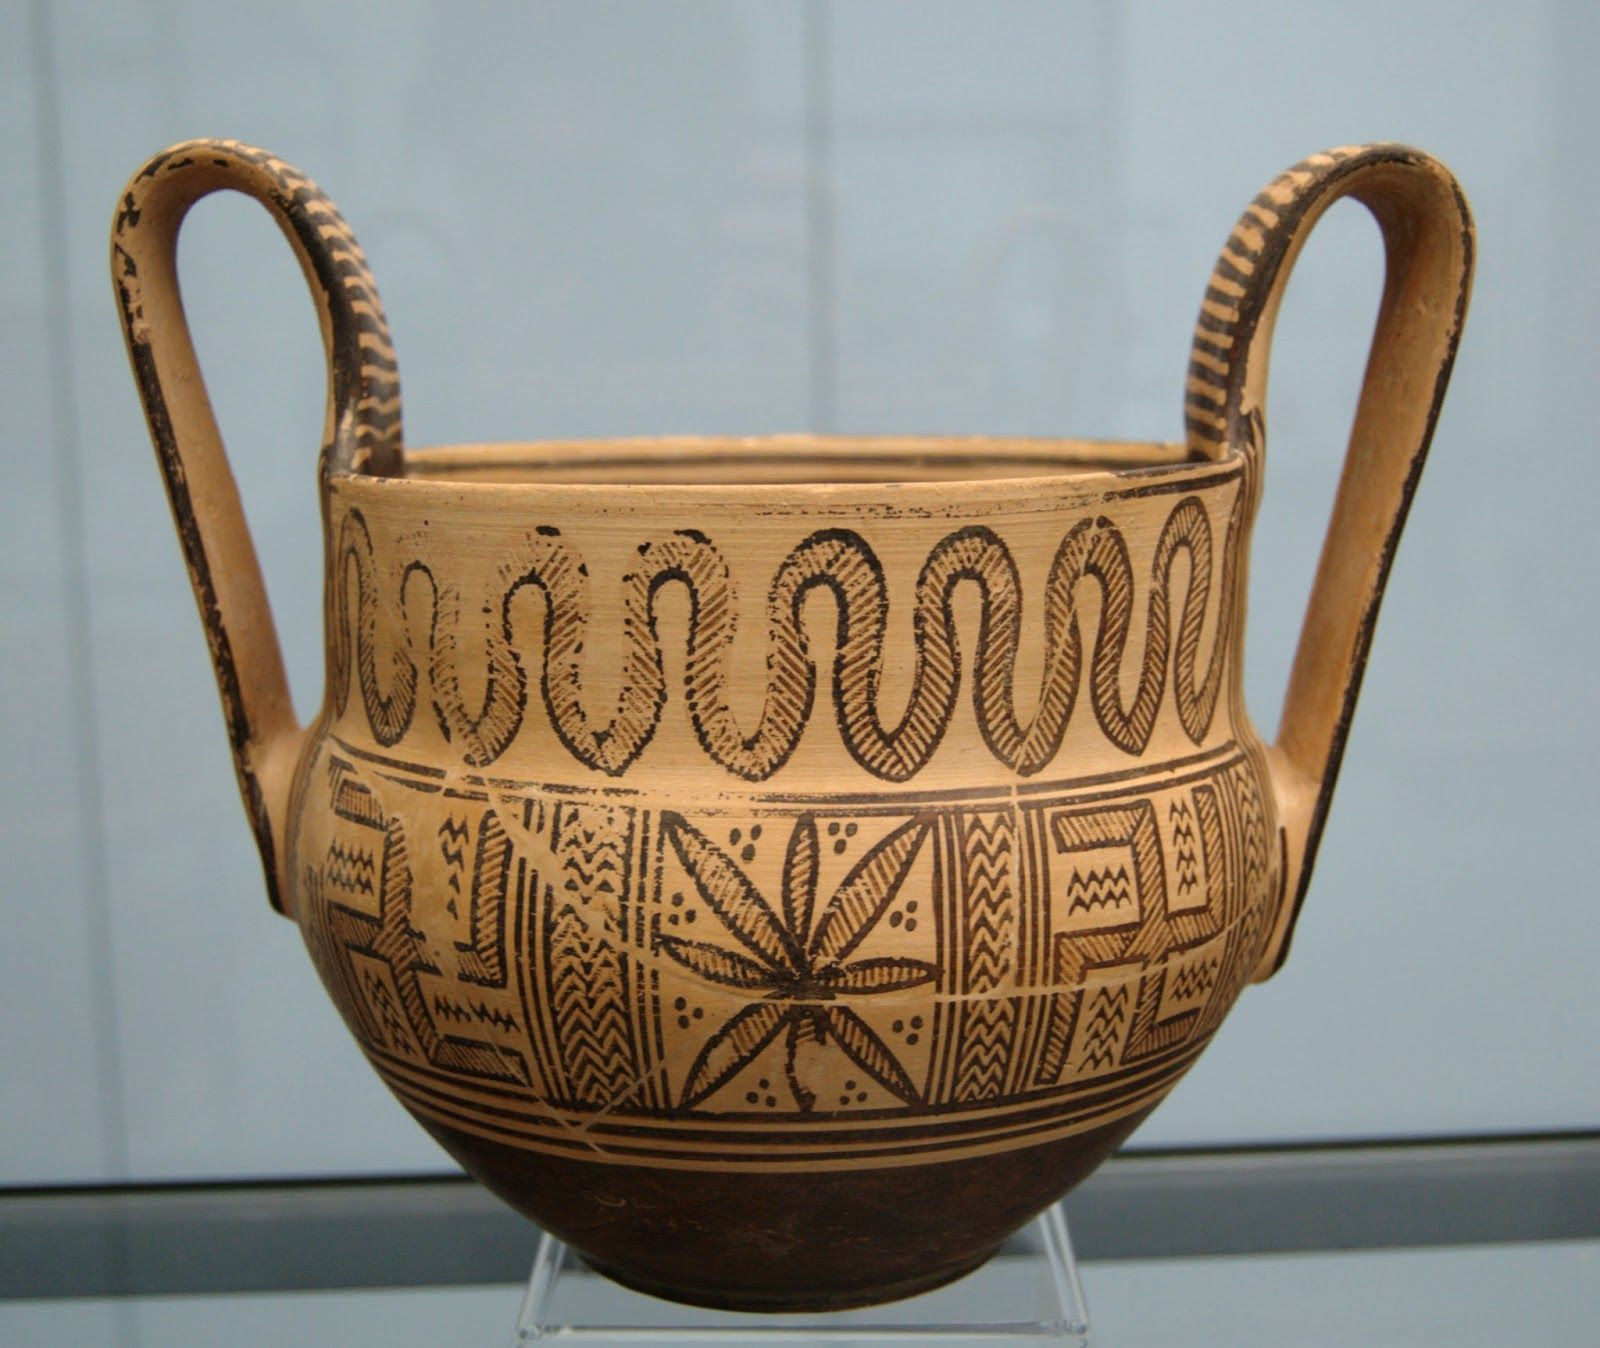 ancient greek vases of ii·ii¹i±i³ii³iµi¯i i¼iµ i¦i±i½ii±ii¯i± iiii±i¯i± i inside ii·ii¹i±i³ii³iµi¯i i¼iµ i¦i±i½ii±ii¯i± iiii±i¯i± i